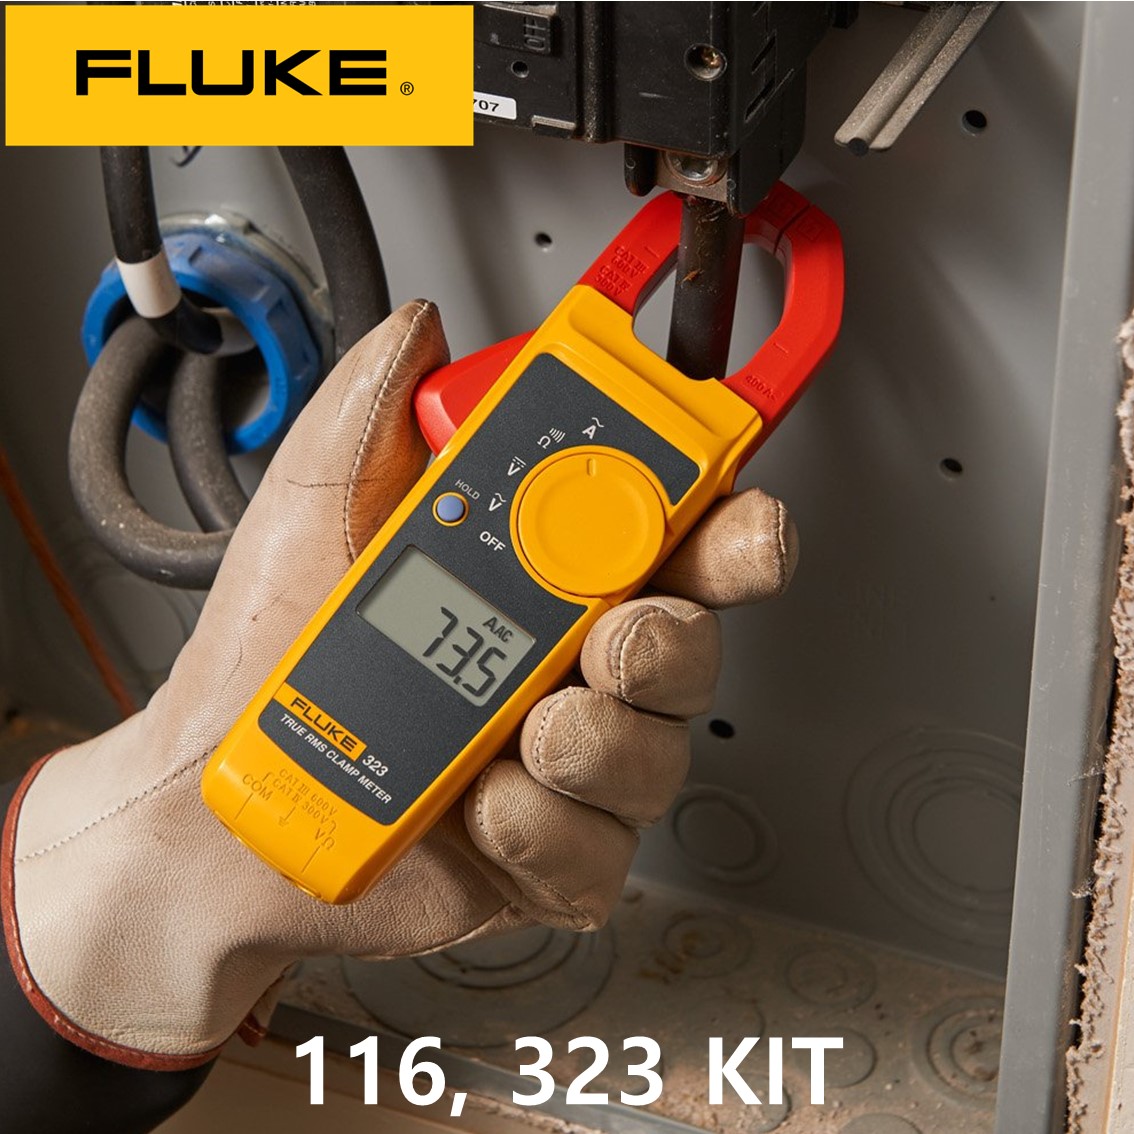 [ FLUKE 116, 323 KIT ] 디지탈 멀티미터, 정품 플루크 116/323 콤보 키트 ( 클램프미터 포함)